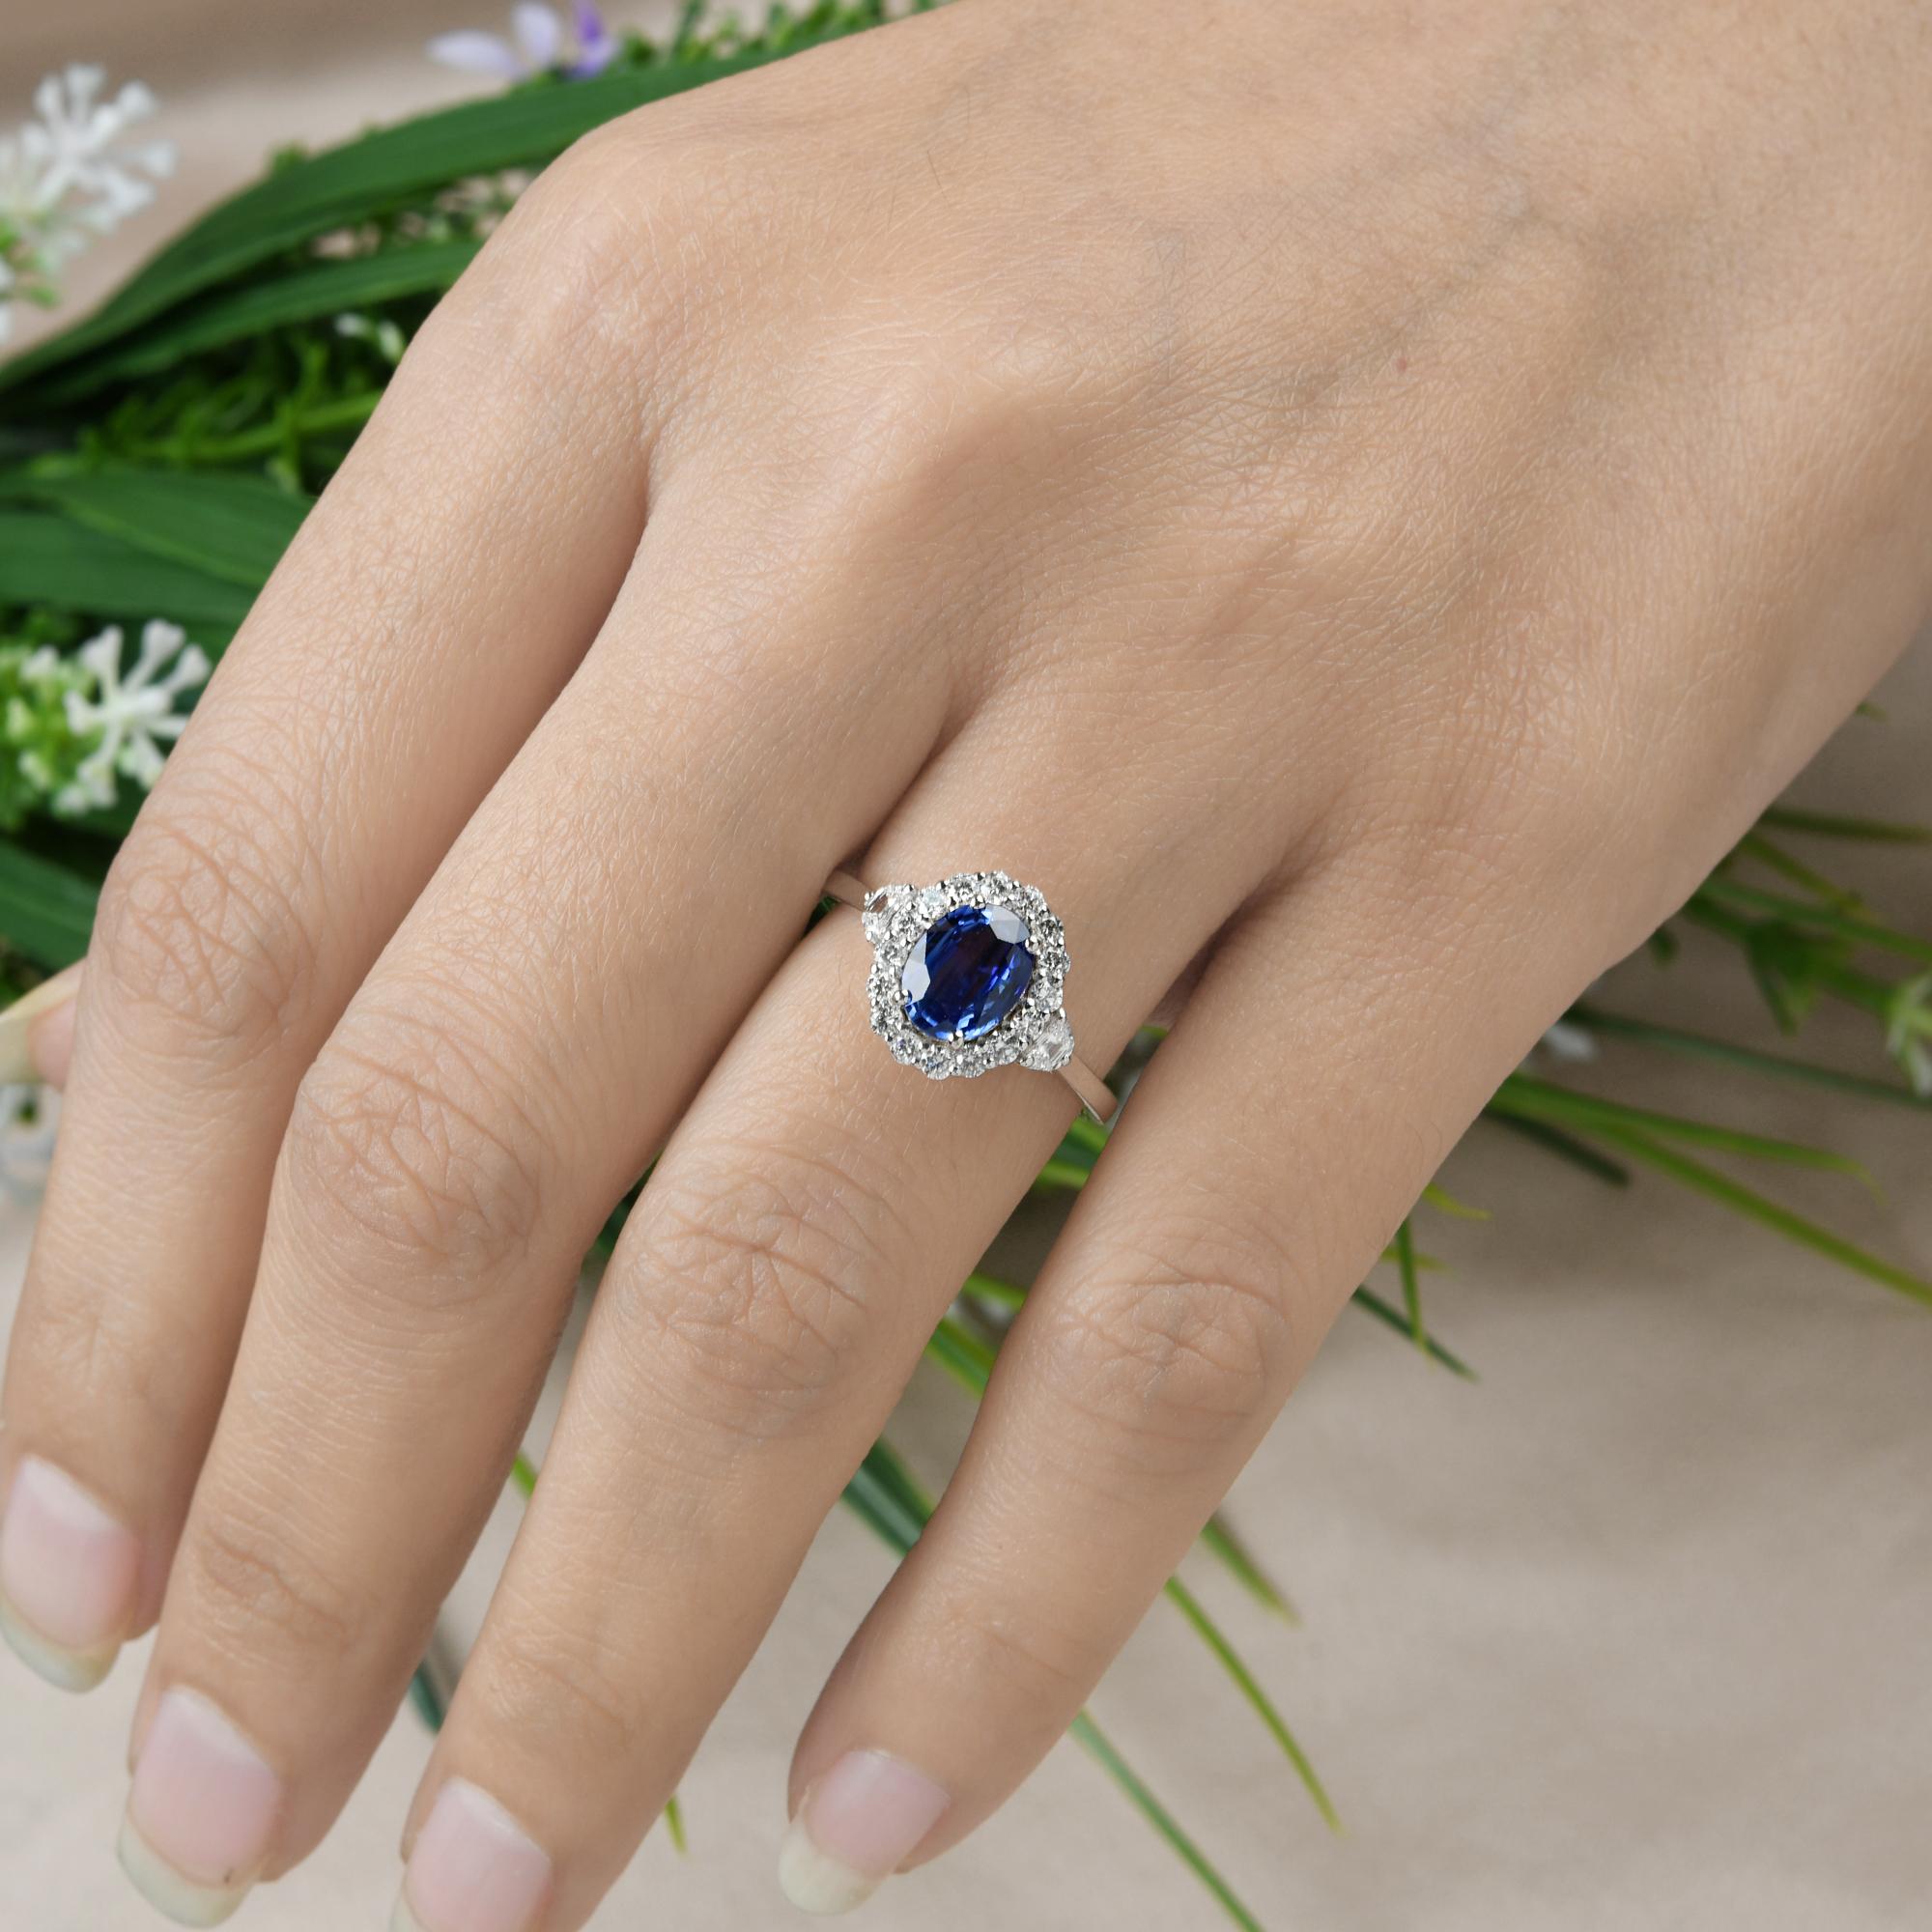 Women's Oval Blue Sapphire Gemstone Cocktail Ring Diamond 14 Karat White Gold Jewelry For Sale